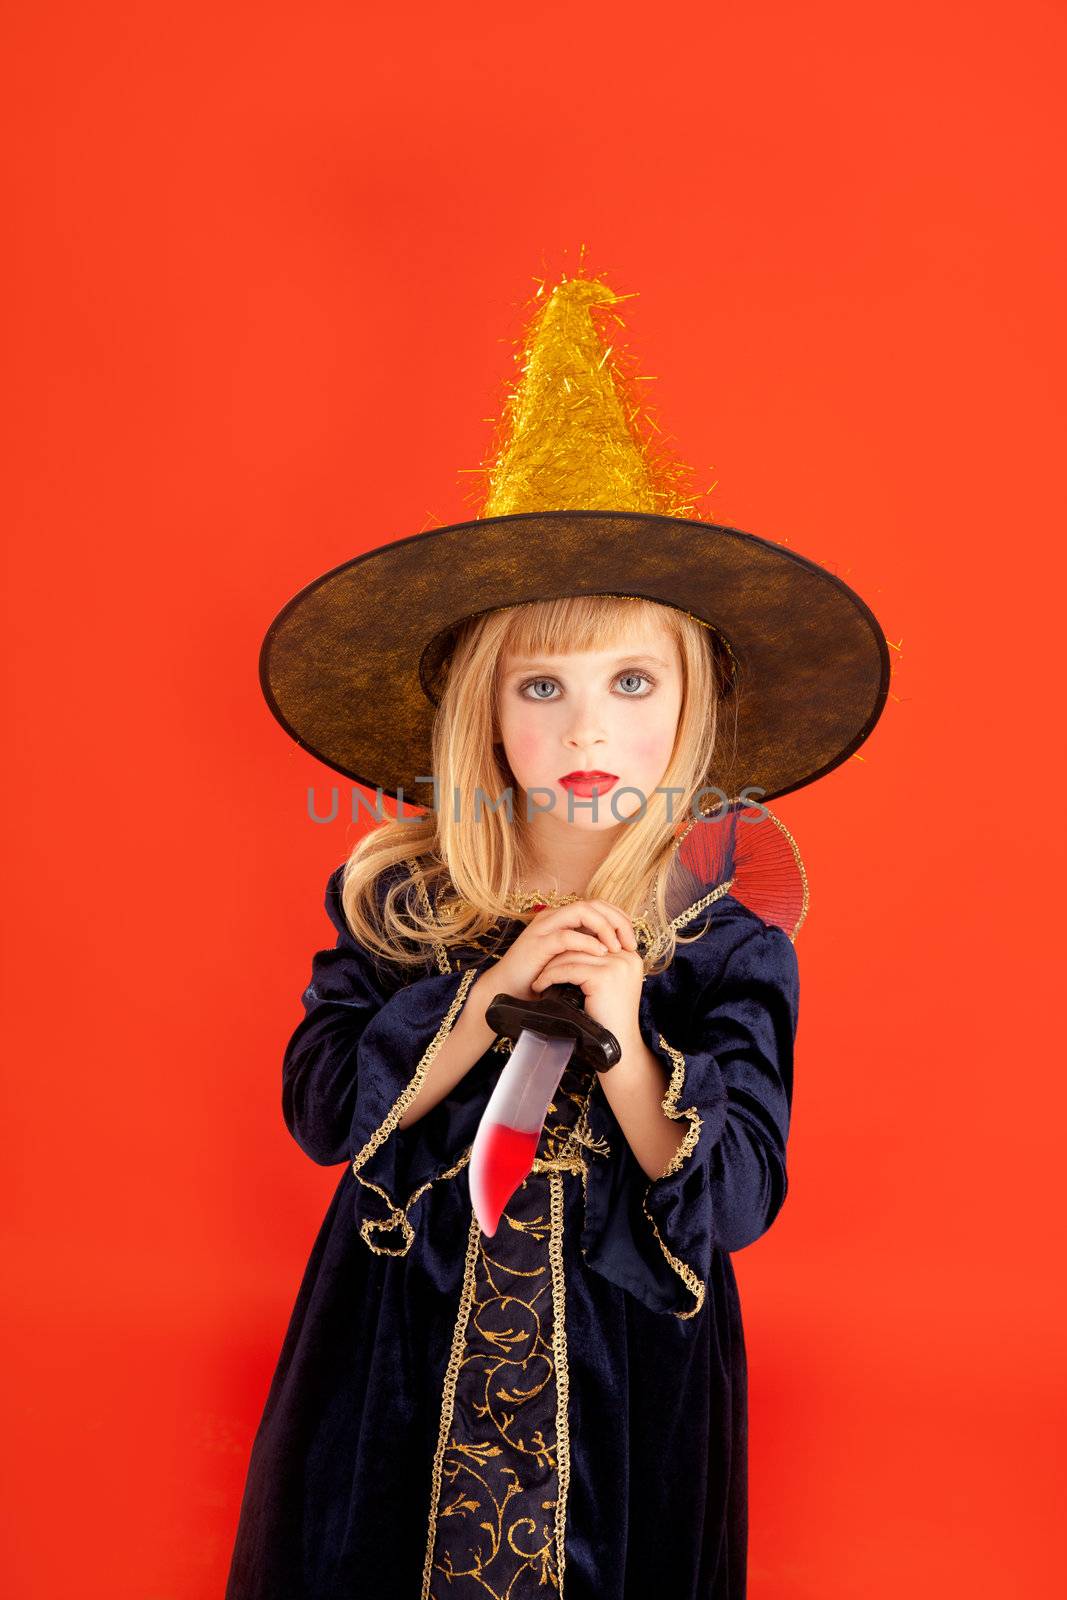 Halloween kid girl costume on orange background